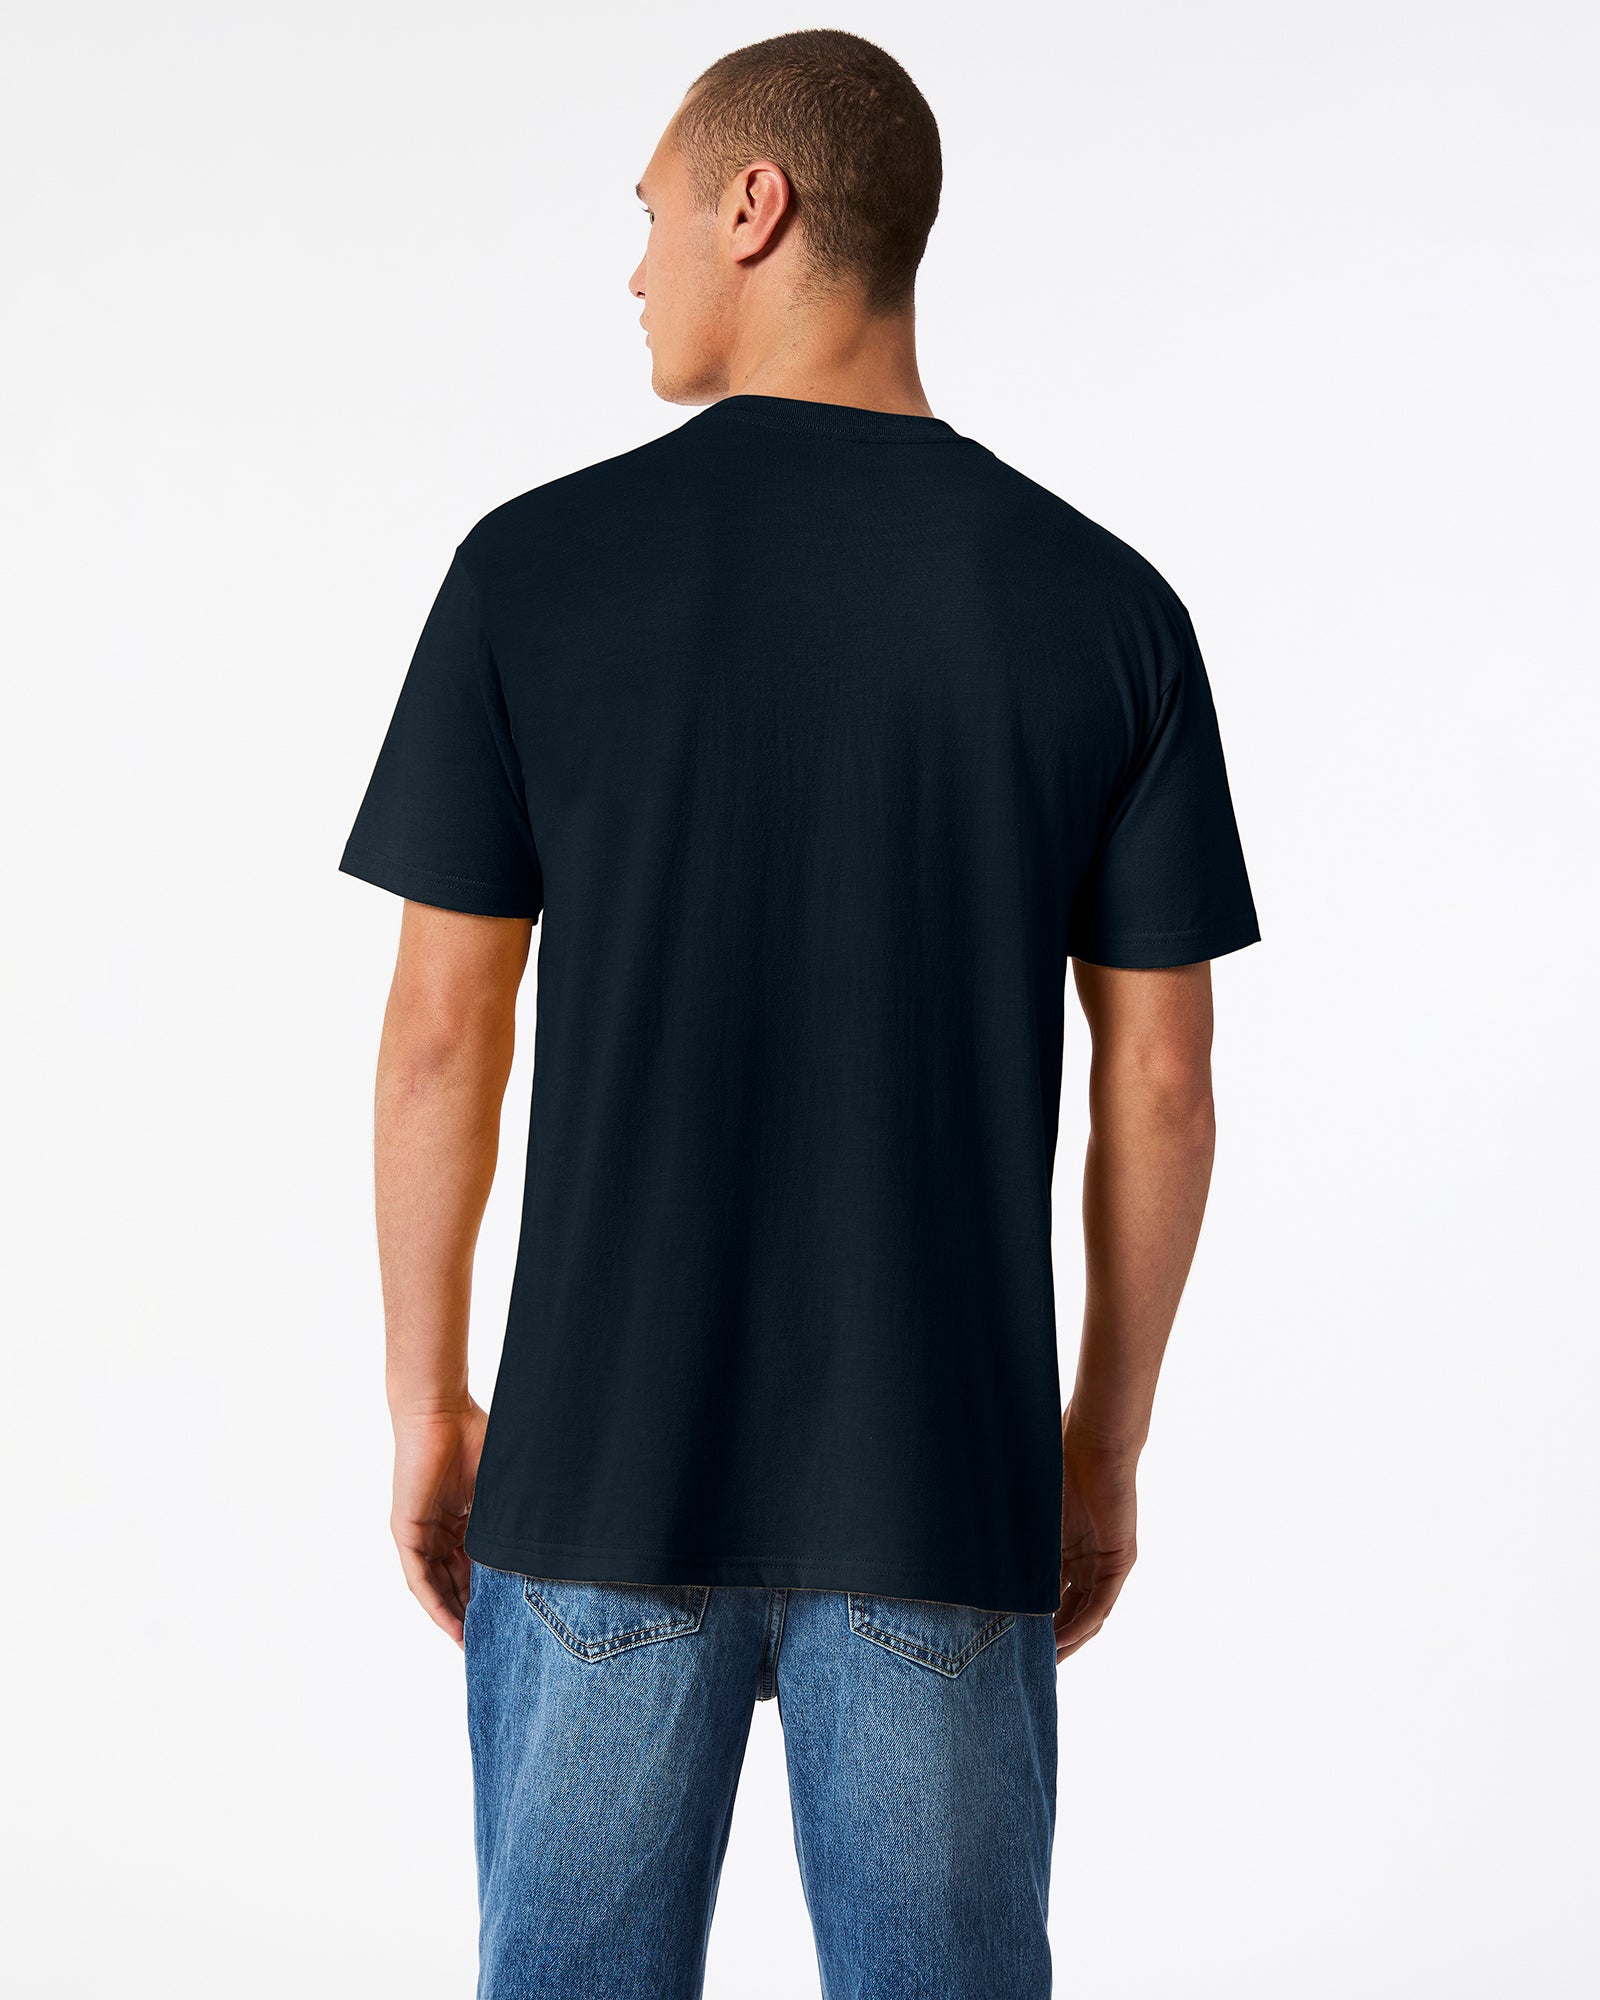 CVC Unisex Short Sleeve T-Shirt - Black